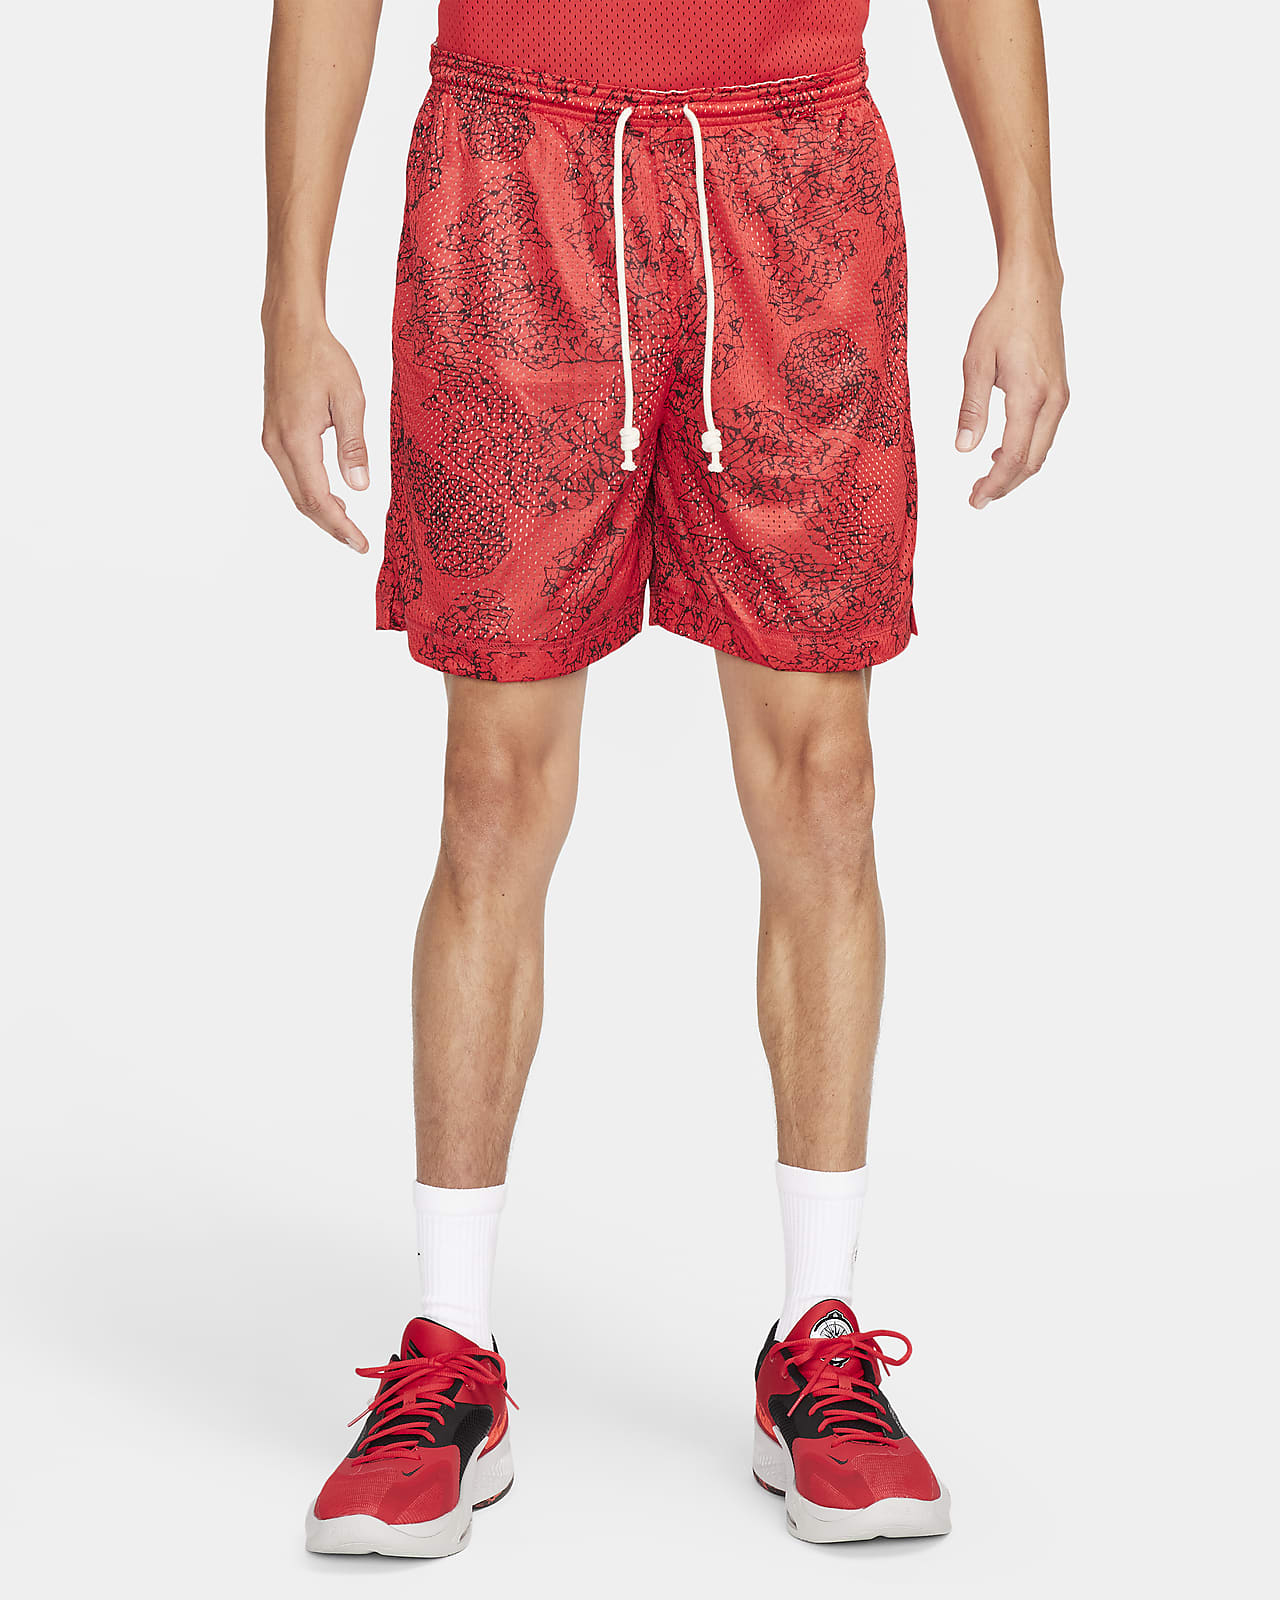 Nike Dri-FIT Standard Issue Men's 6 Reversible Basketball Shorts.